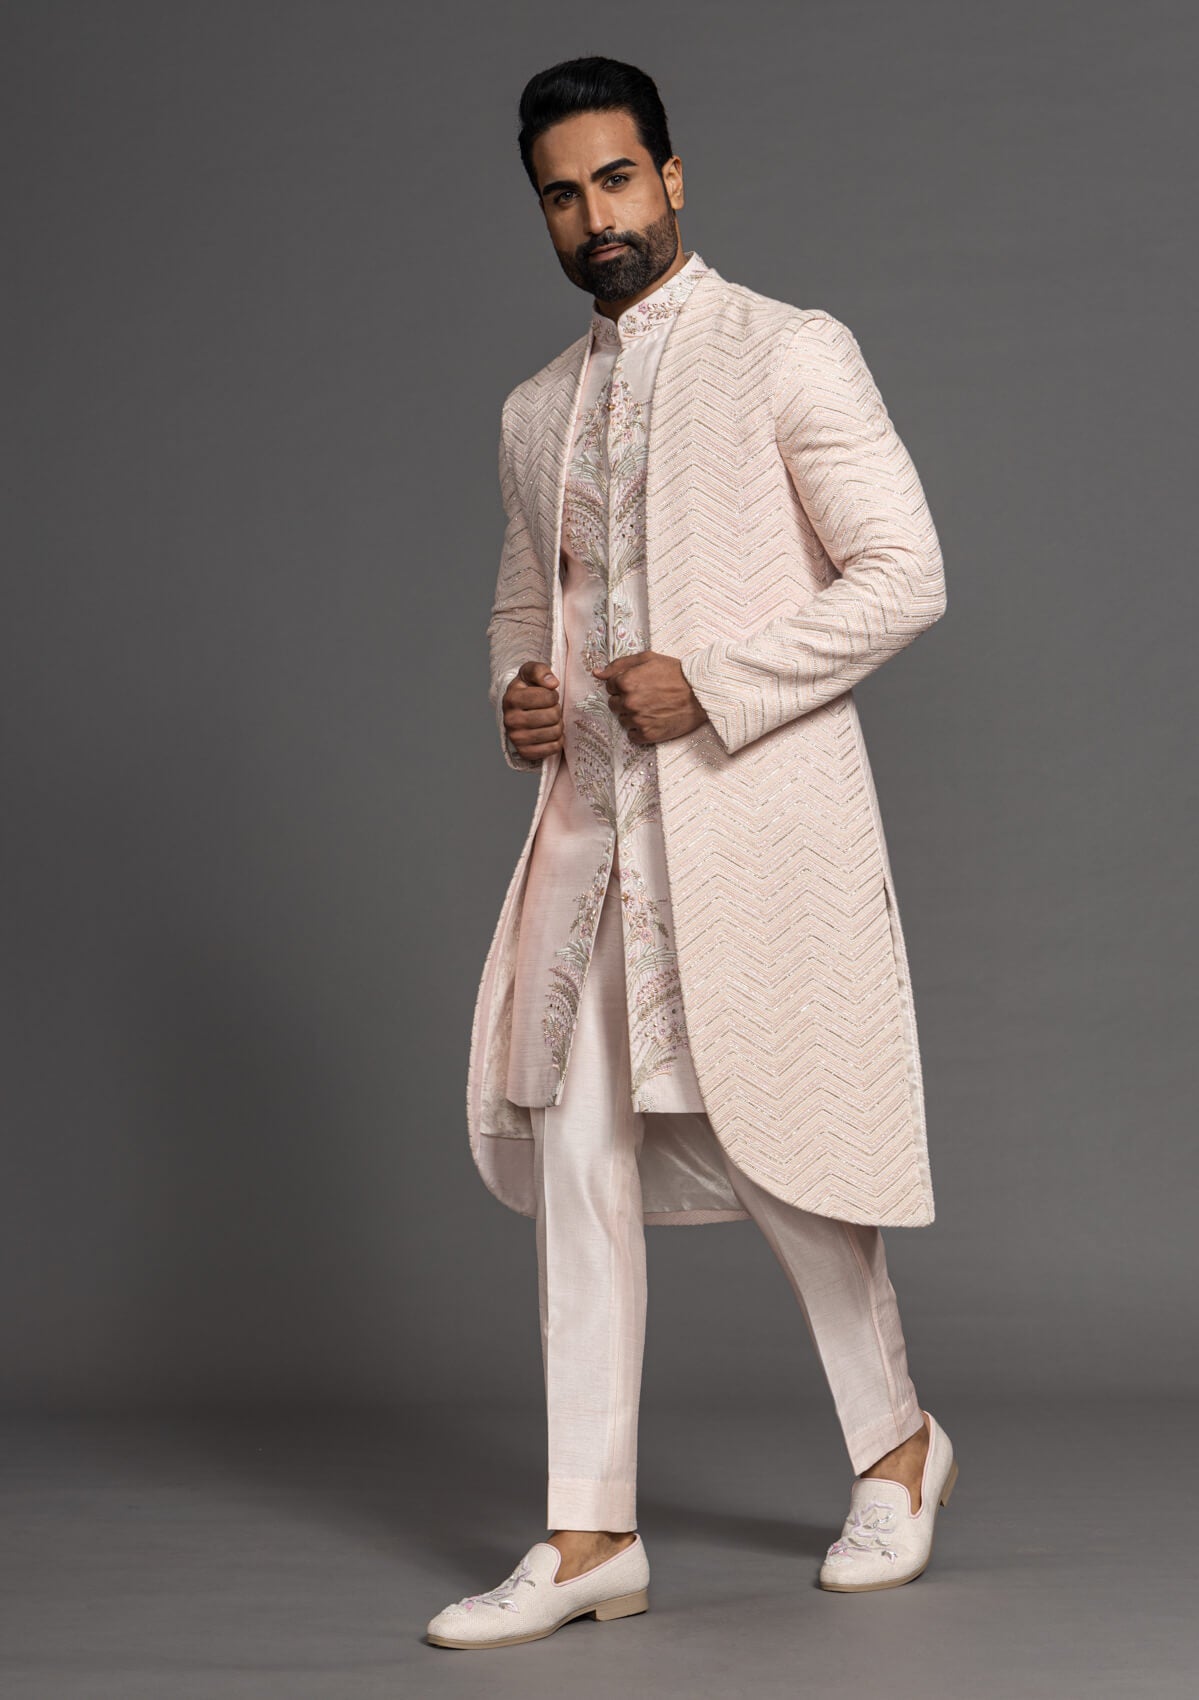 Stylish fusion attire blending Indian and Western fashion elements